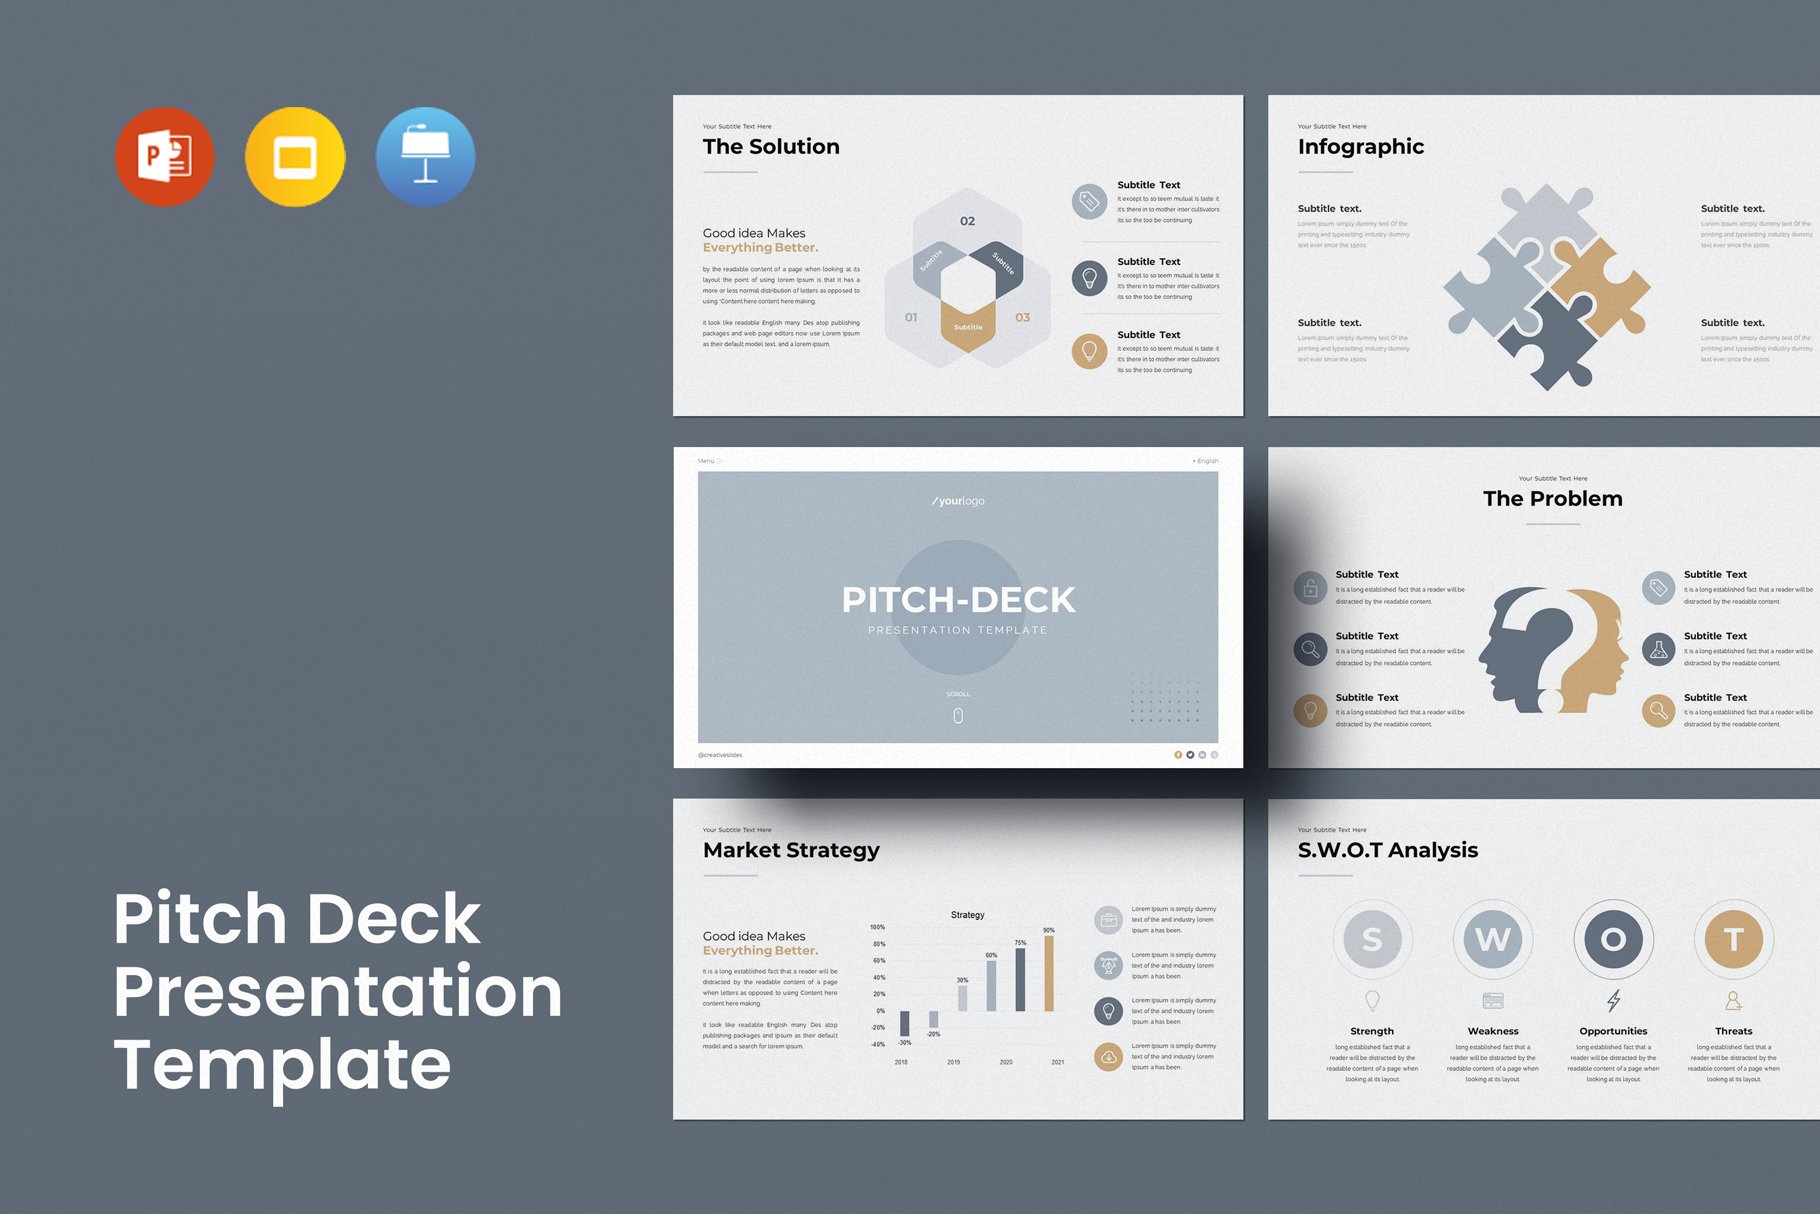 a pitch deck is a visual slide presentation